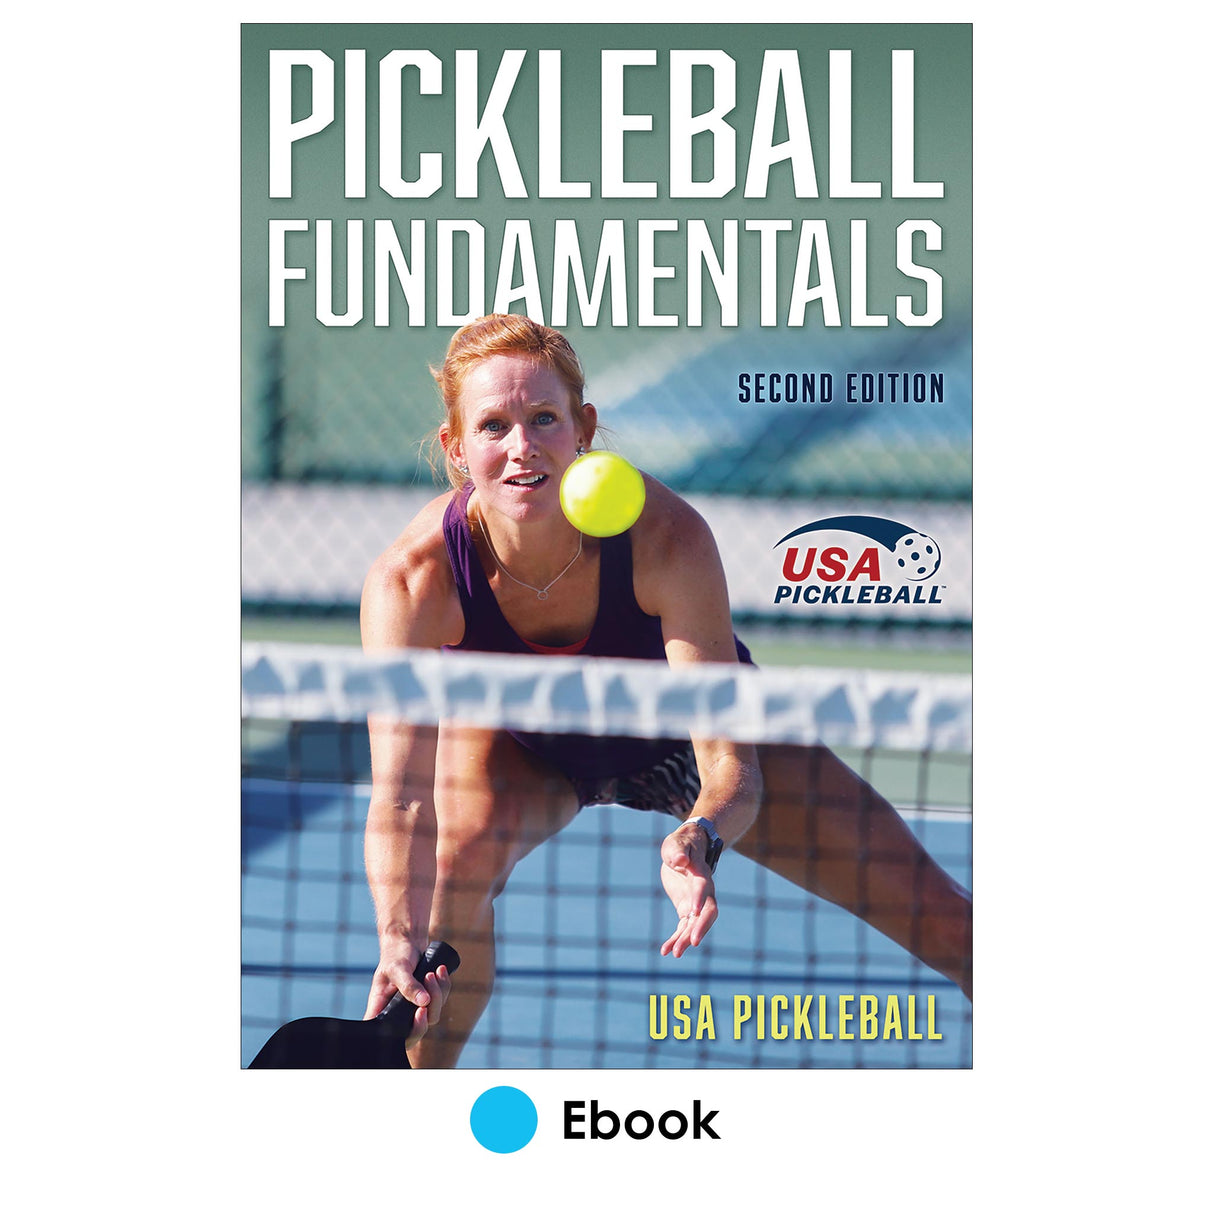 Pickleball Fundamentals 2nd Edition epub